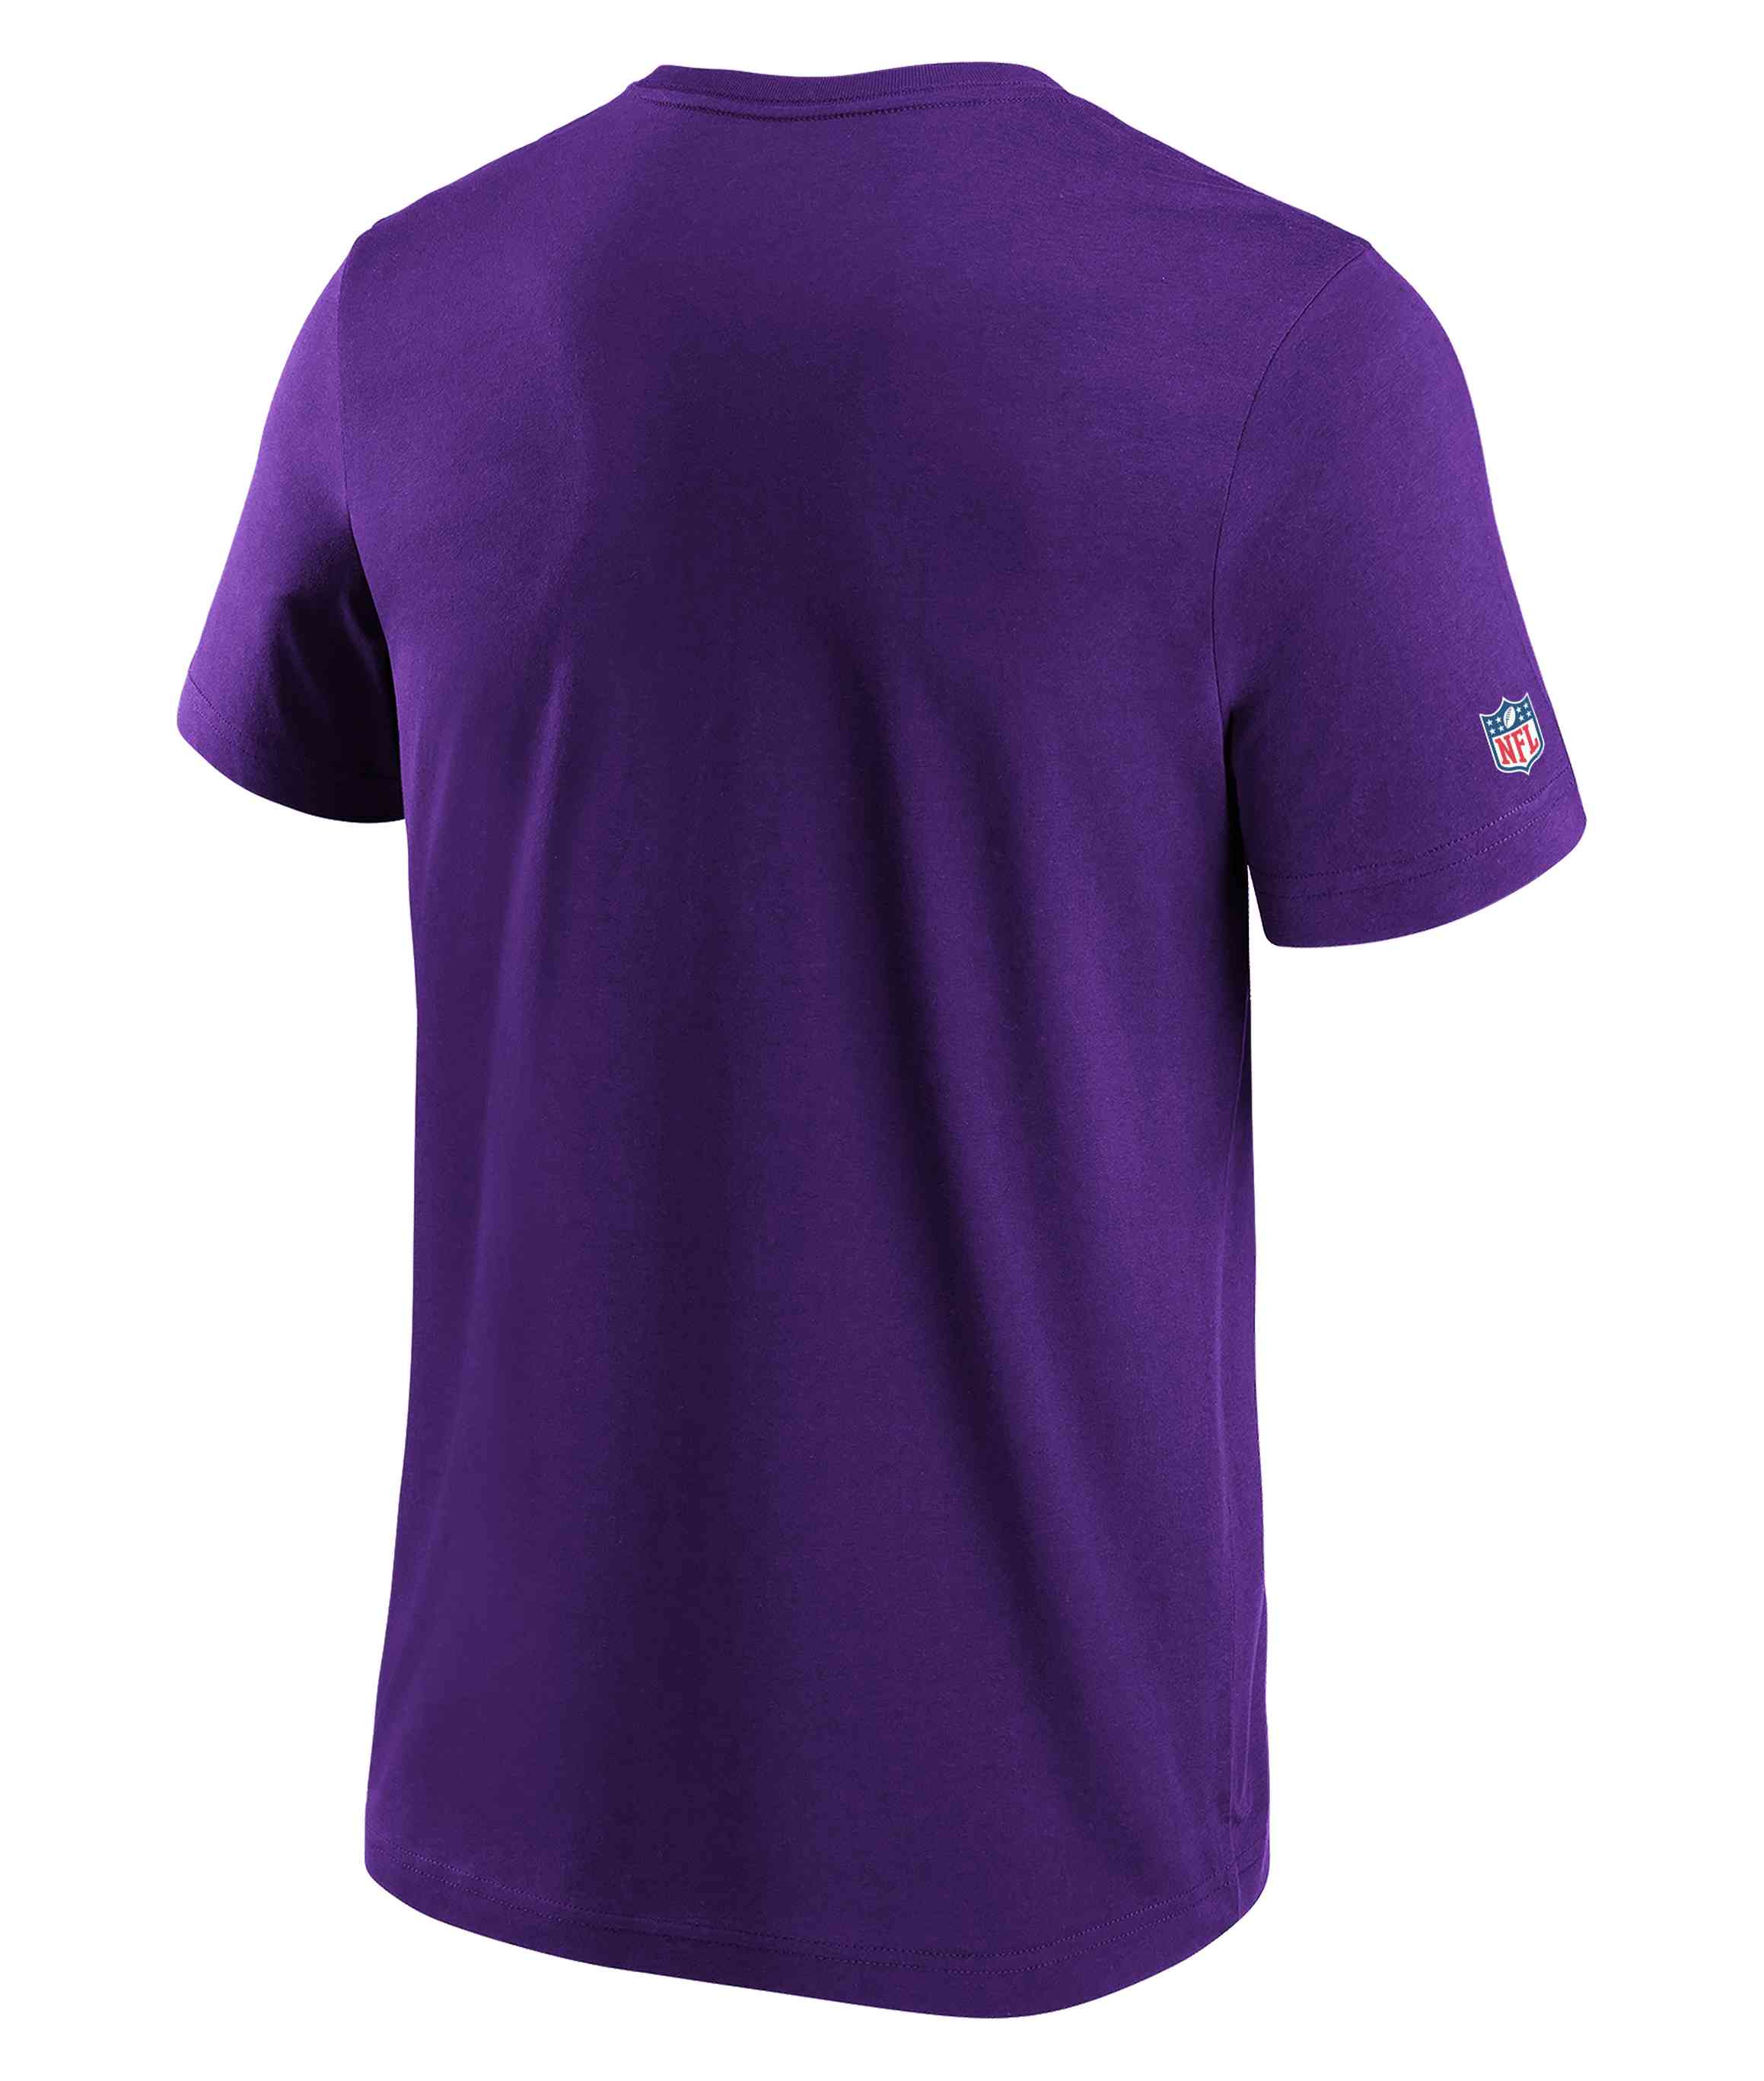 Fanatics - NFL Minnesota Vikings Primary Logo Graphic T-Shirt